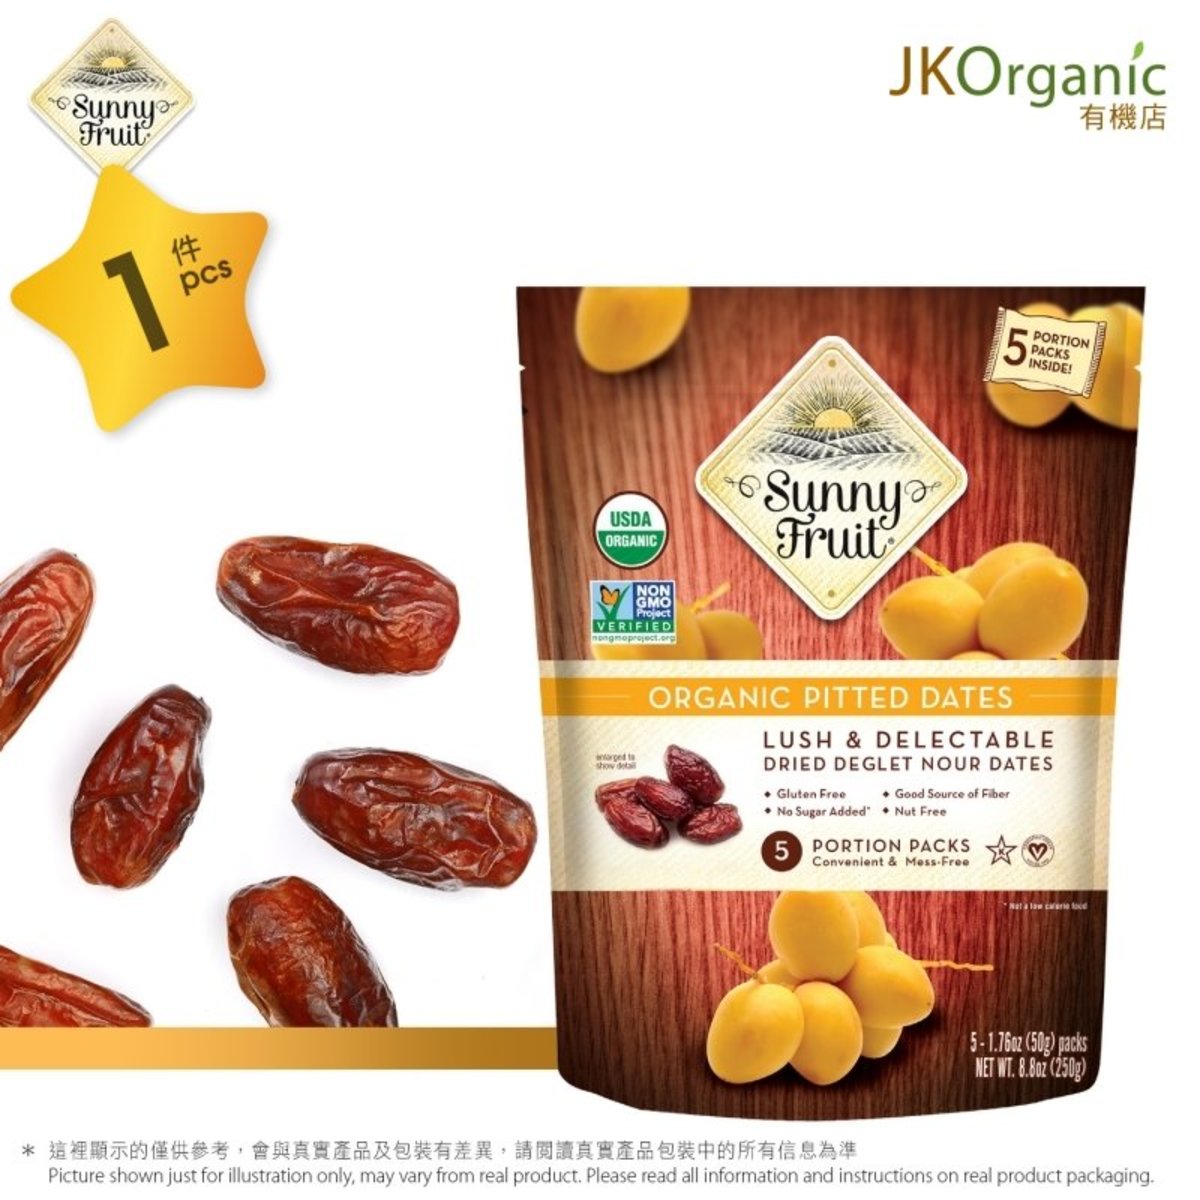 有機椰棗乾(5小包裝) Organic Pitted Dates (5 Portion Packs) (250g)